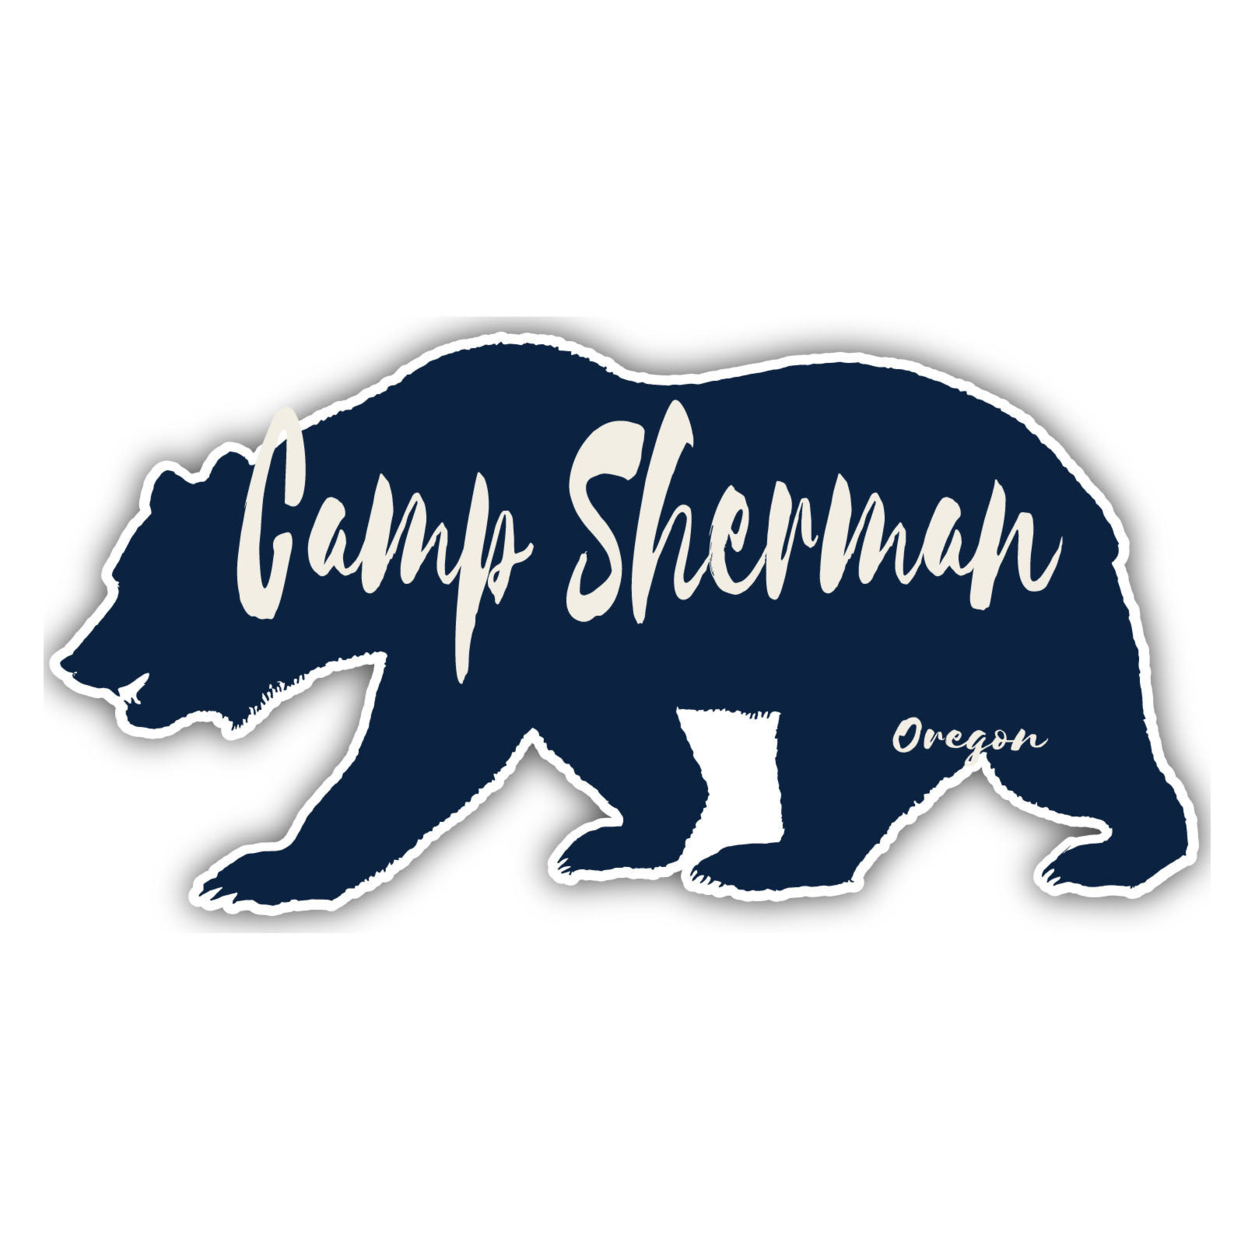 Camp Sherman Oregon Souvenir Decorative Stickers (Choose Theme And Size) - 4-Pack, 2-Inch, Bear